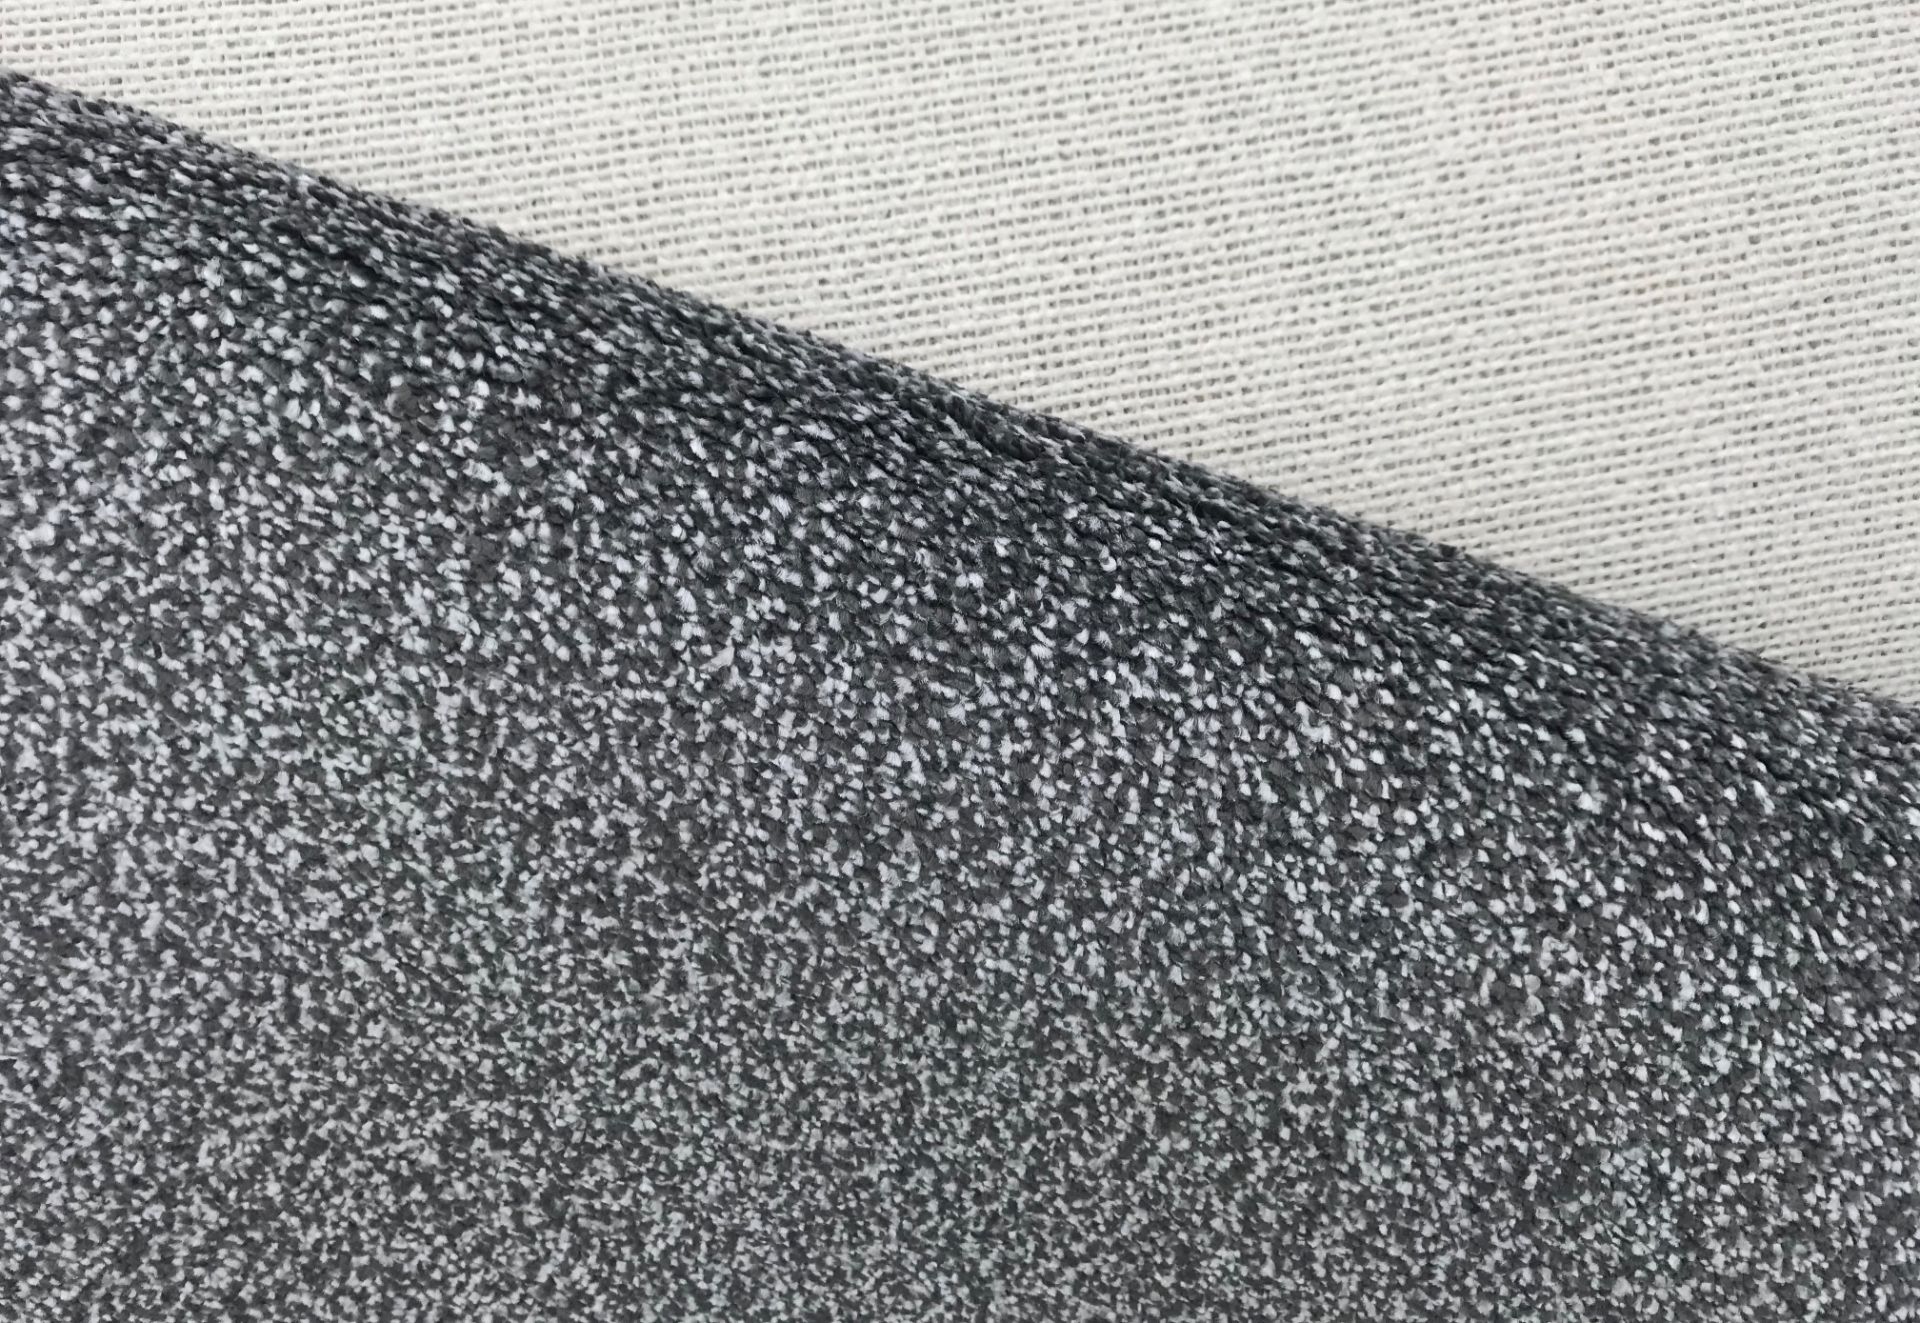 1 x Luxury 50Oz Twist Pile Carpet - Colour Platinum Grey - 25X4 Meter Roll - Rrp £36.99/Sqm - Ref: - Image 4 of 5